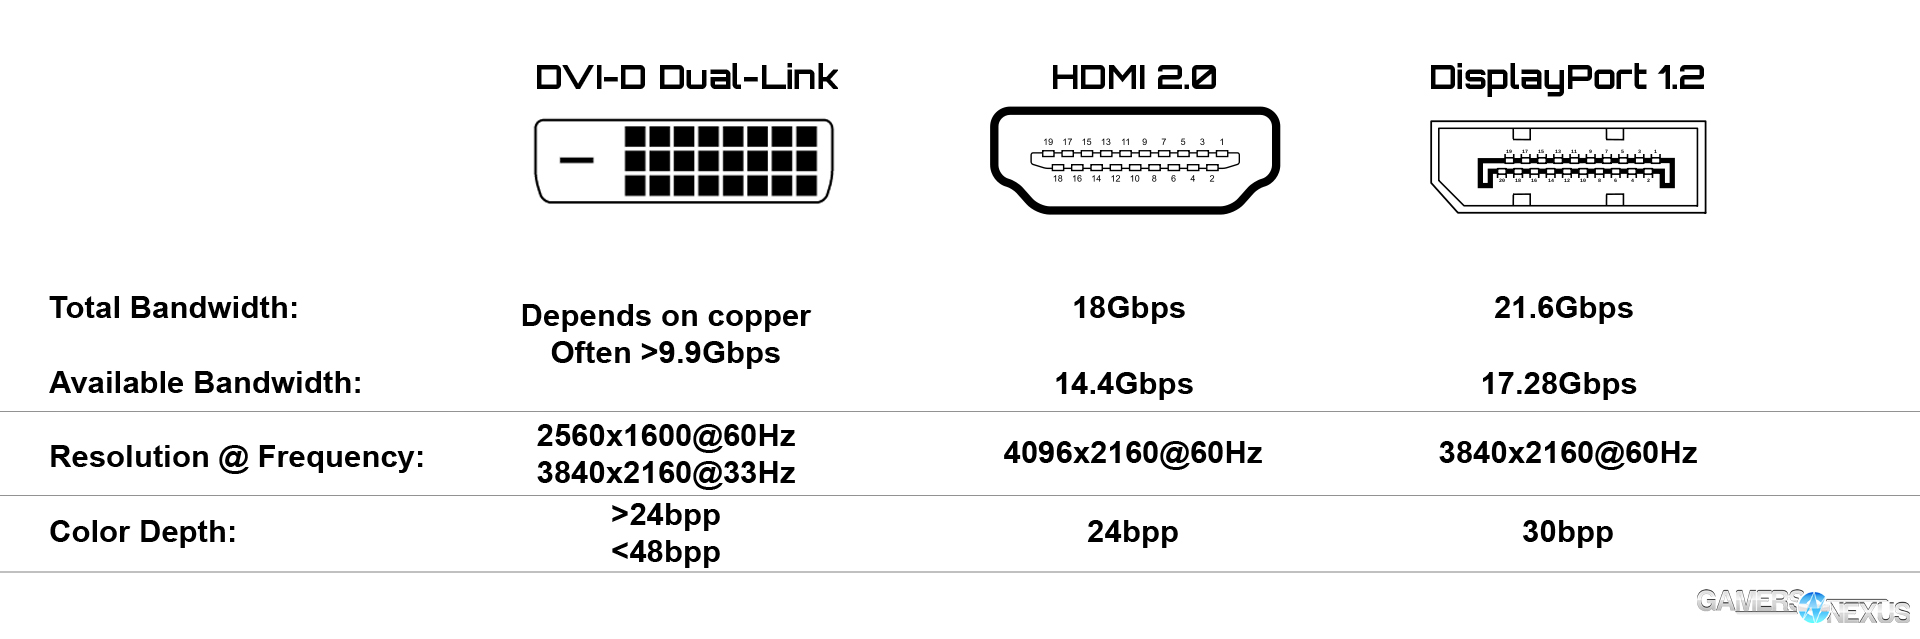 Cables! DVI Differences, HDMI vs. DisplayPort, SATA II vs. SATA